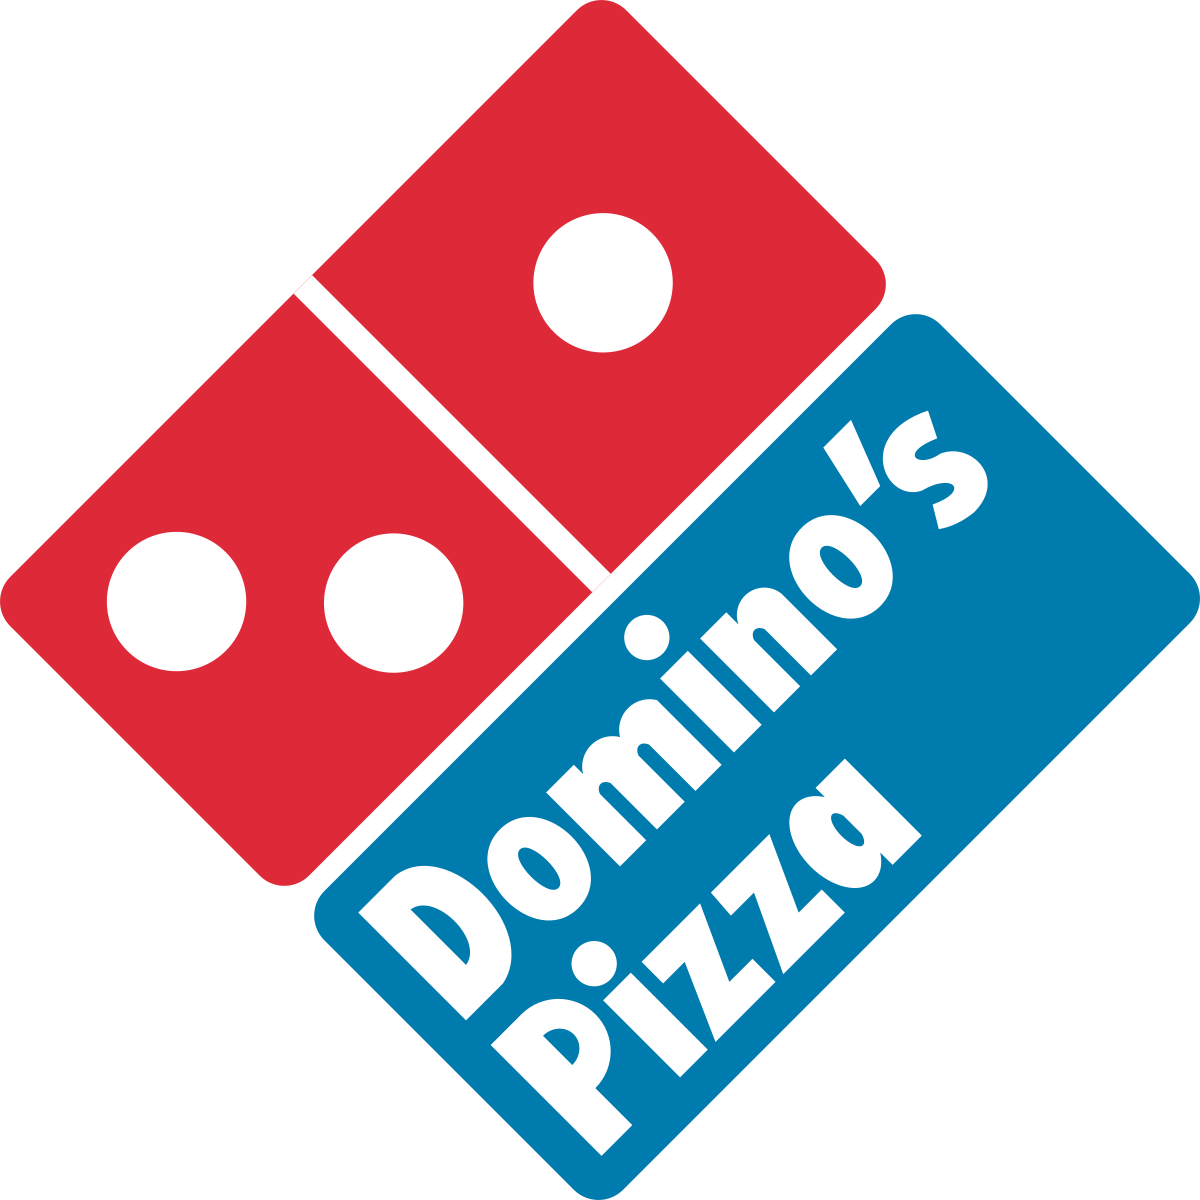 File:Dominos pizza logo.svg - Wikimedia Commons